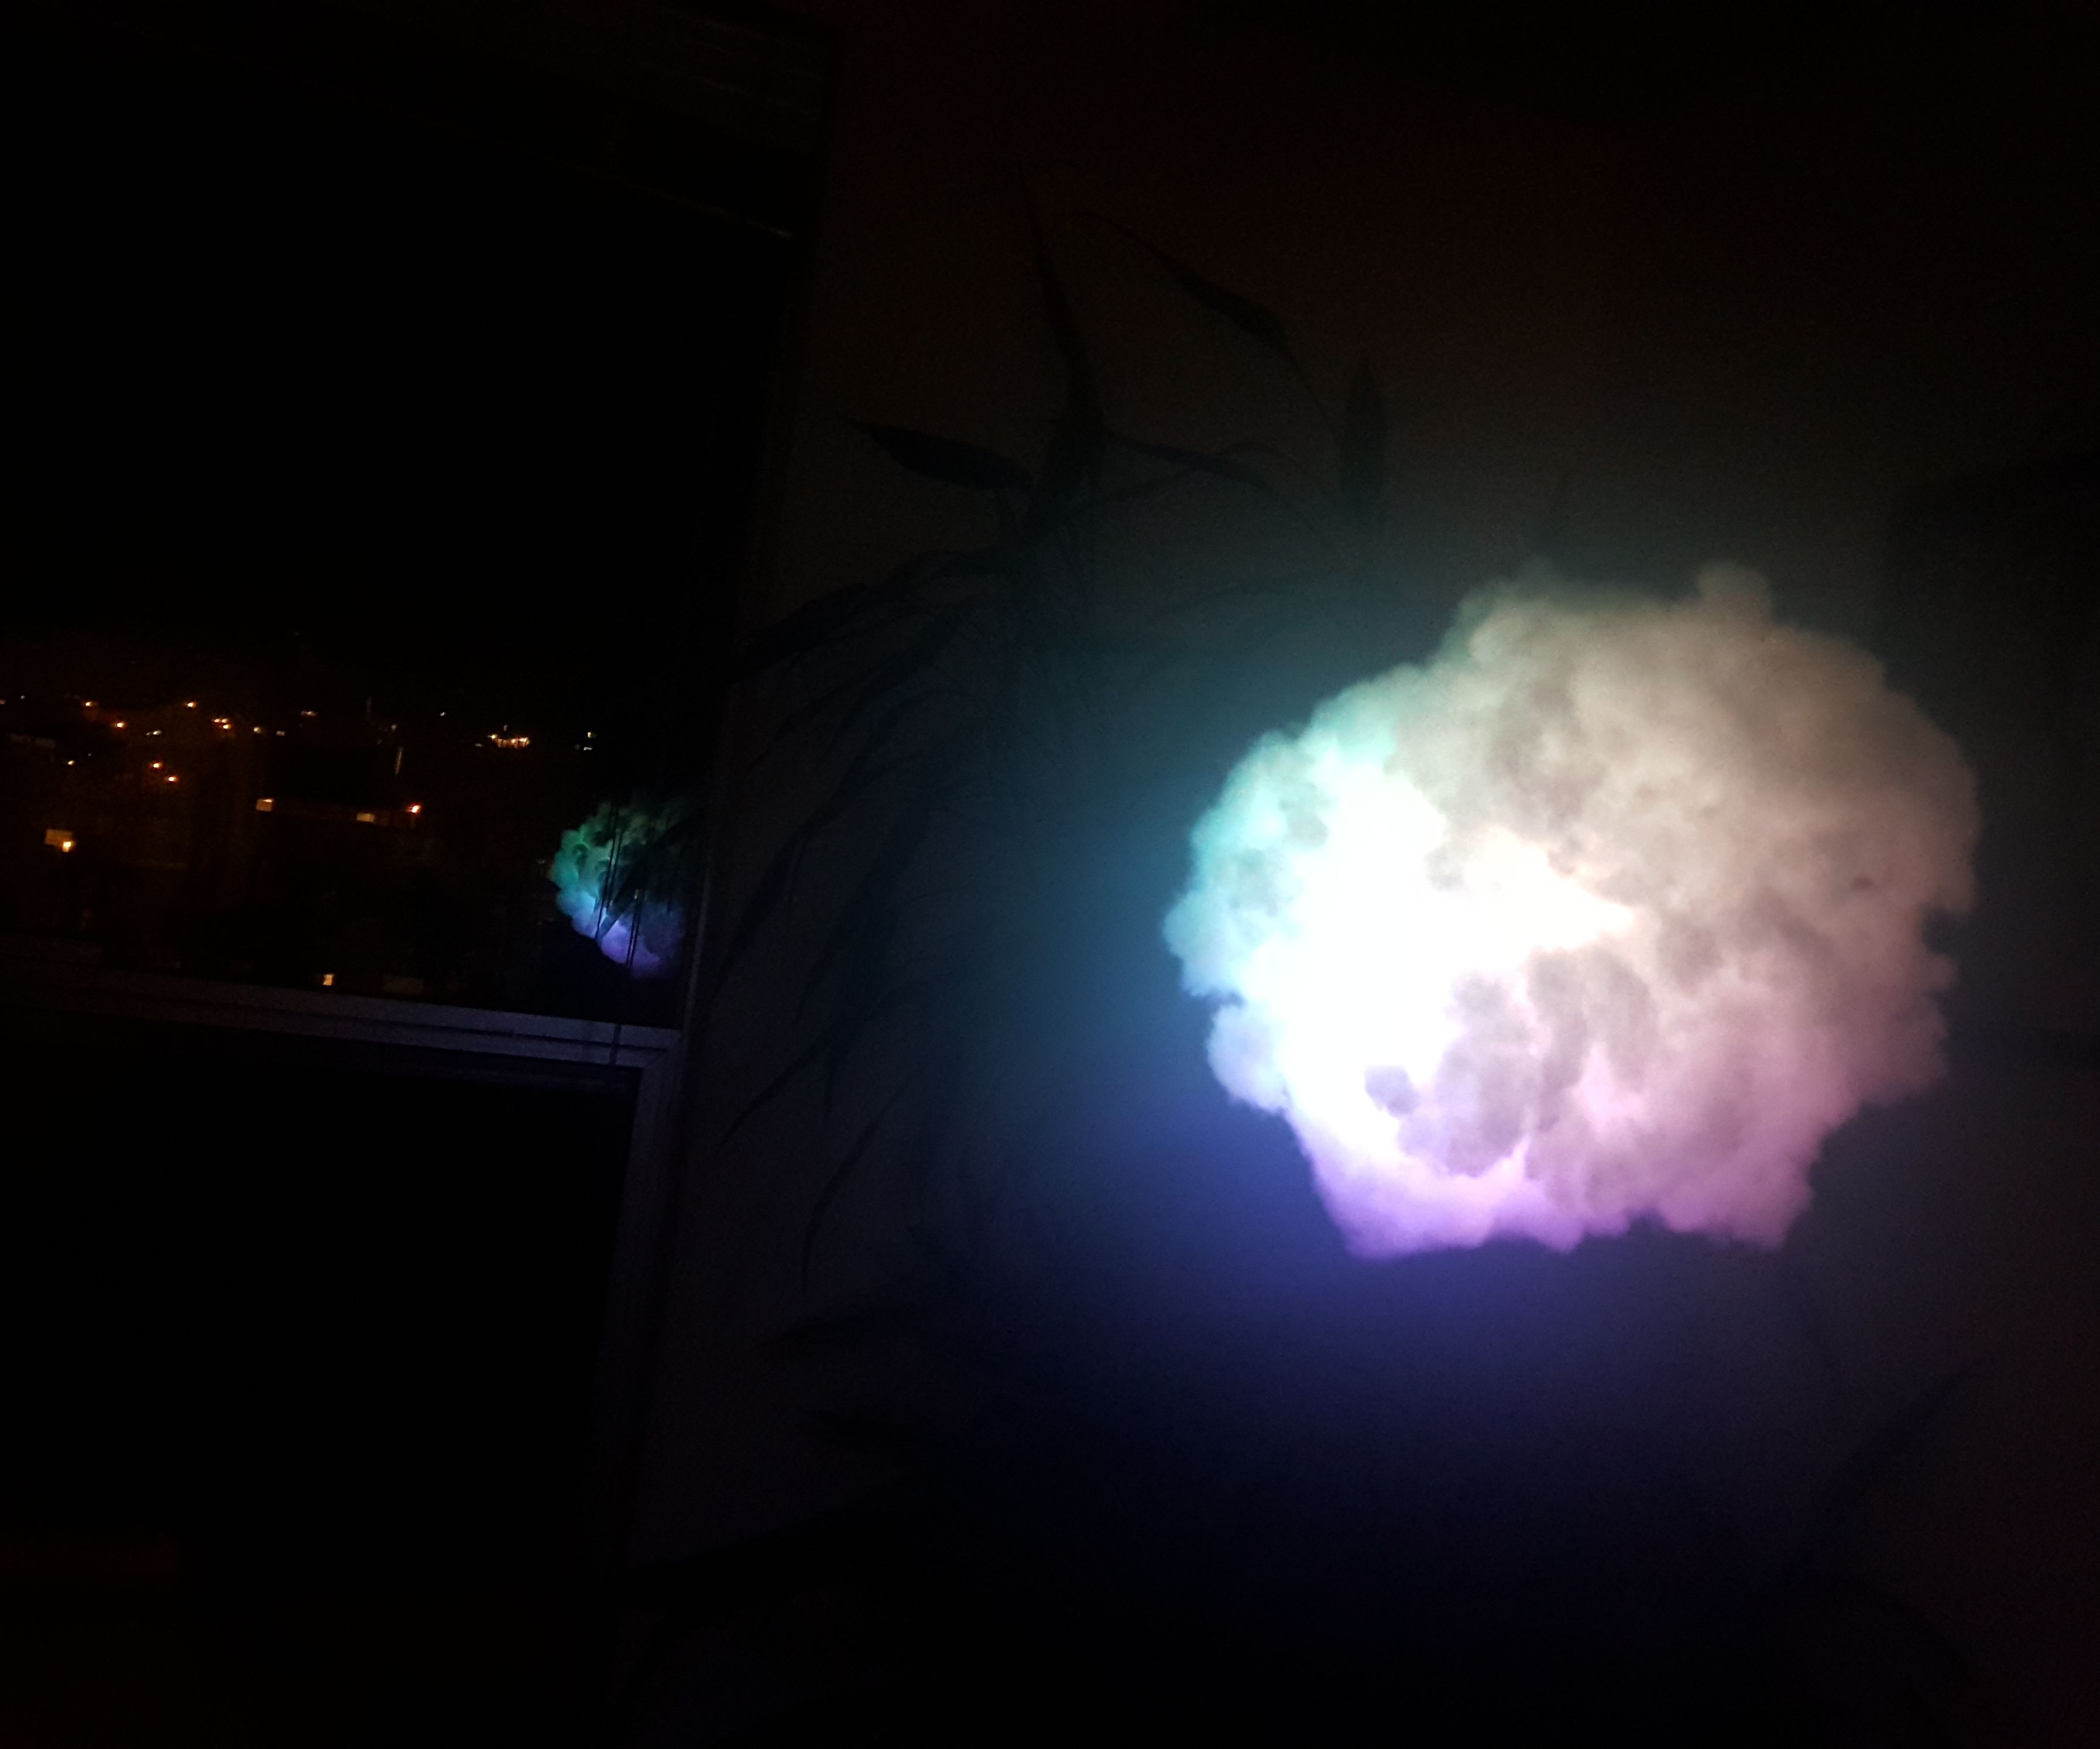 The Glow Cloud